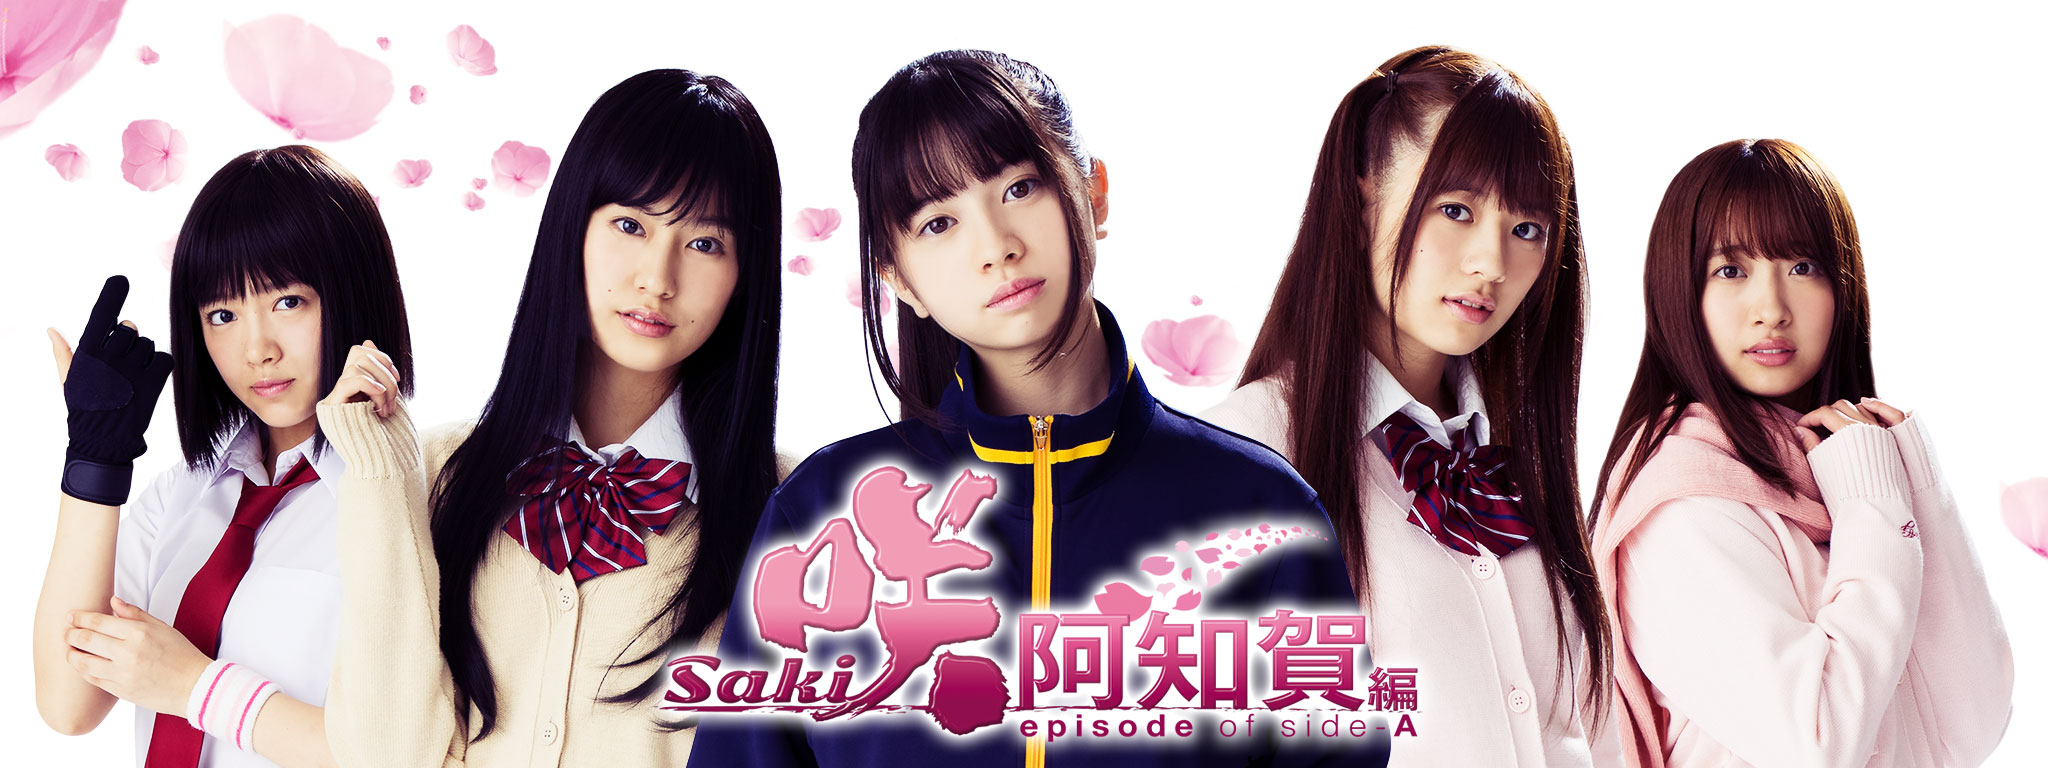 映画咲-Saki-阿知賀編 episode of side-A Blu-ray-